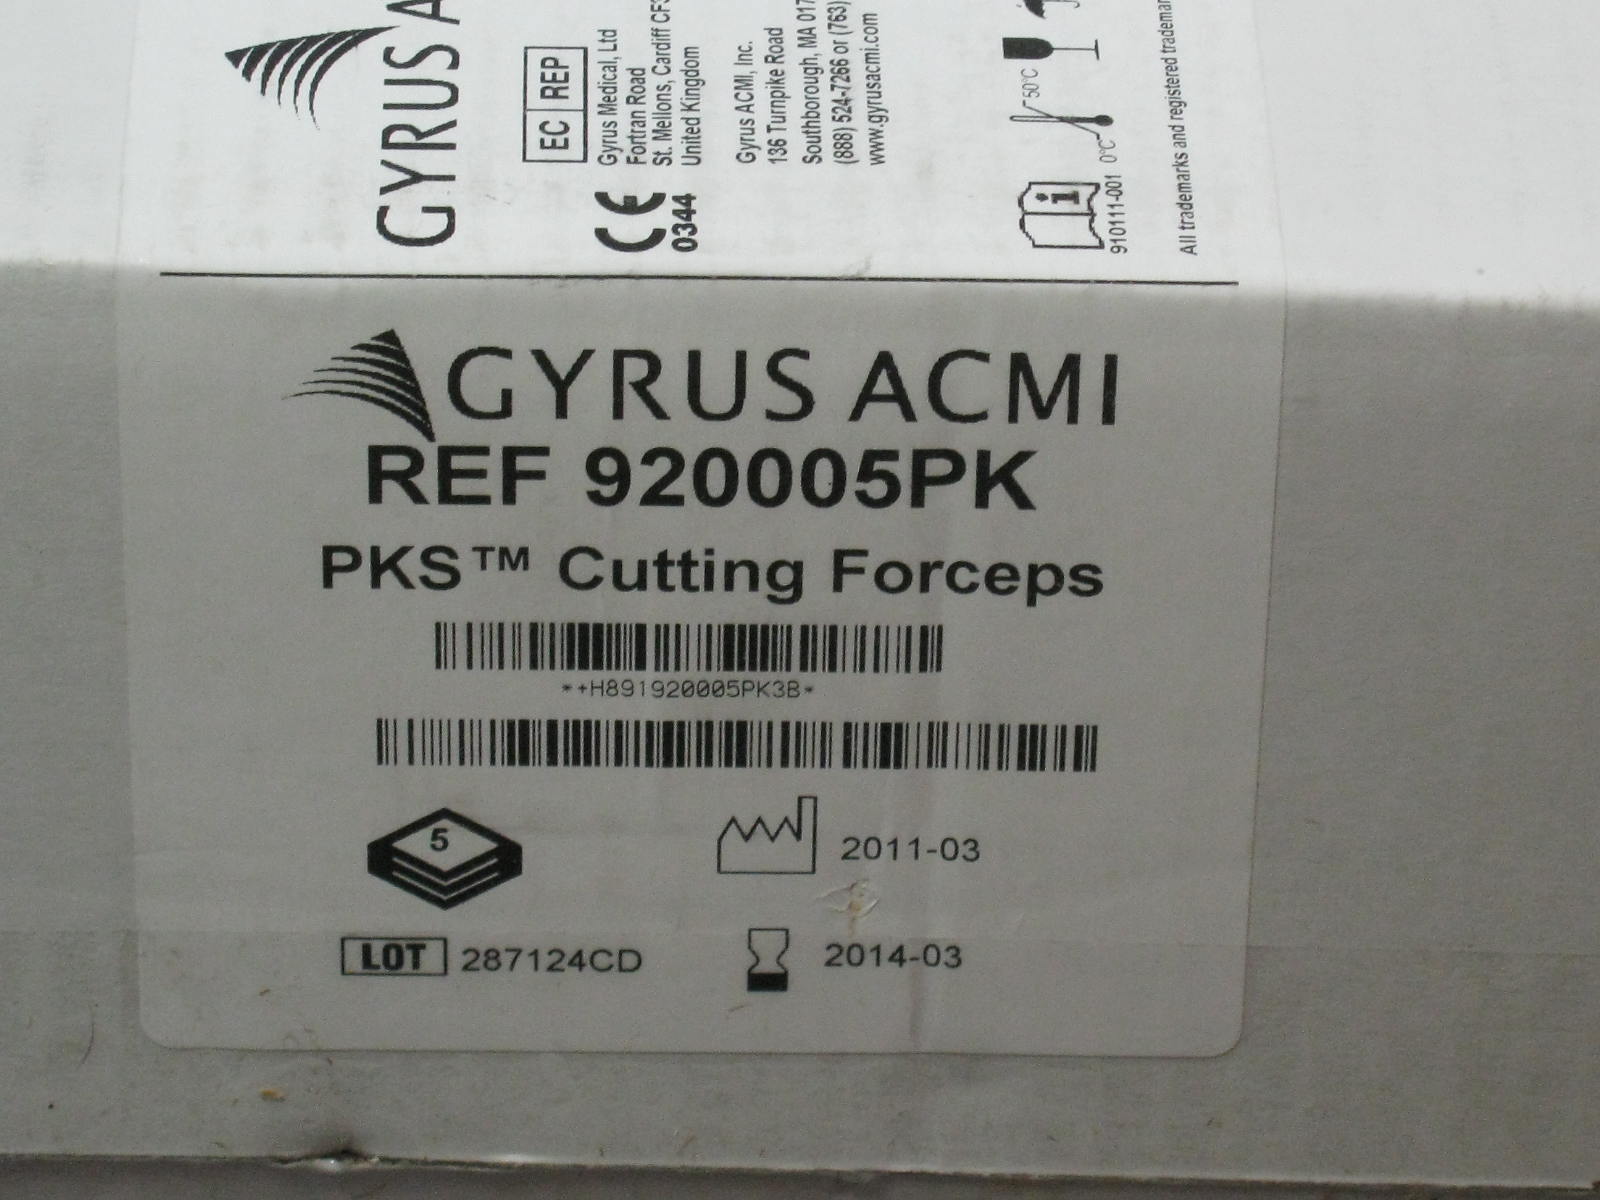 5 Gyrus Acmi 920005PK PKS Cutting Forceps Exp 03/2014 3